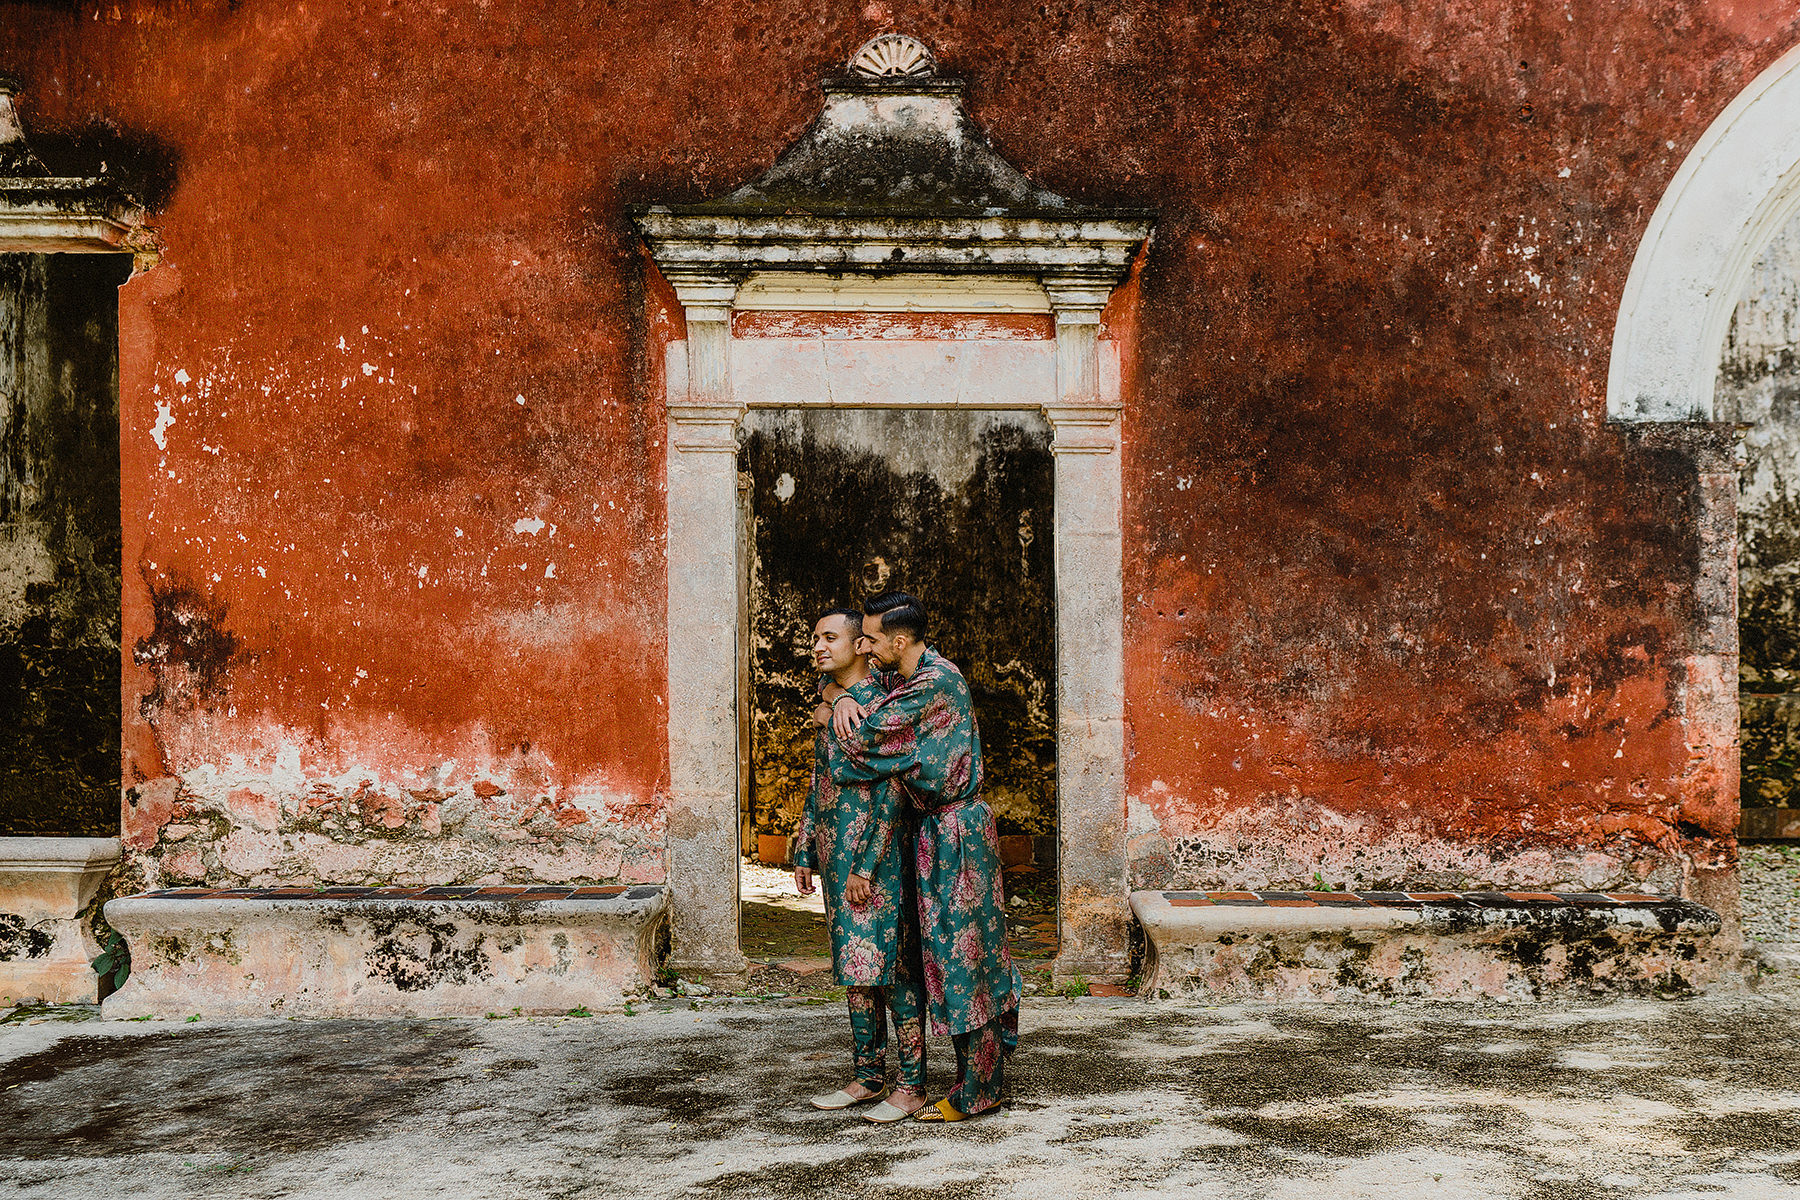 same-sex indian mexican destination wedding at hacienda uayamon in campeche